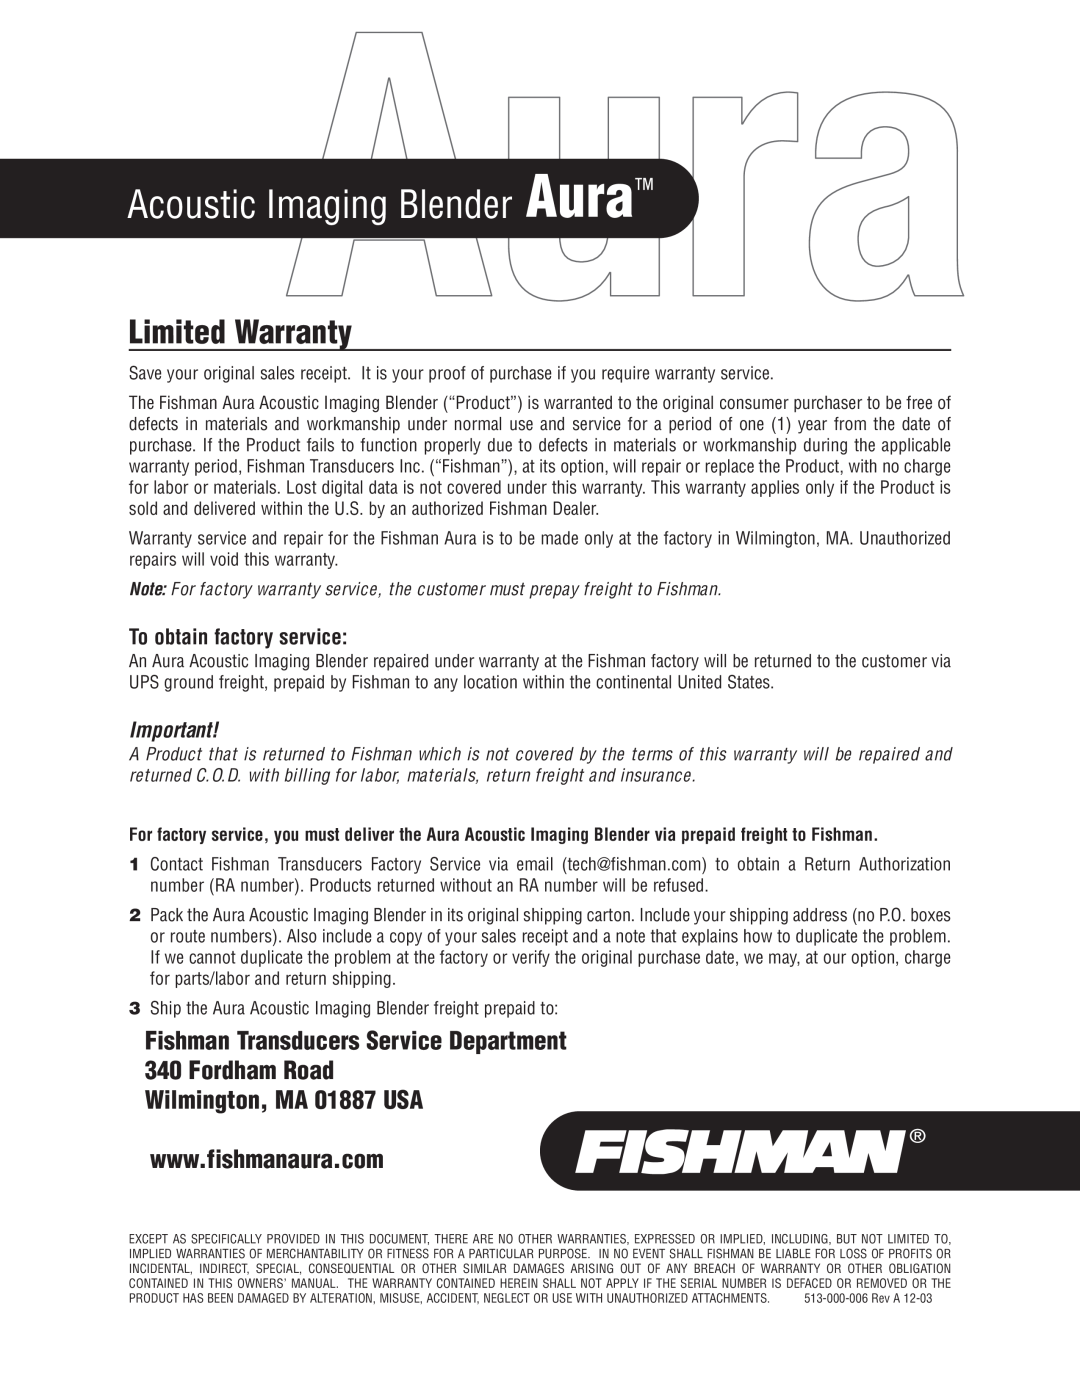 Fishman Aura manual Limited Warranty, Fishman Transducers Service Department 340 Fordham Road, Wilmington, MA 01887 USA 